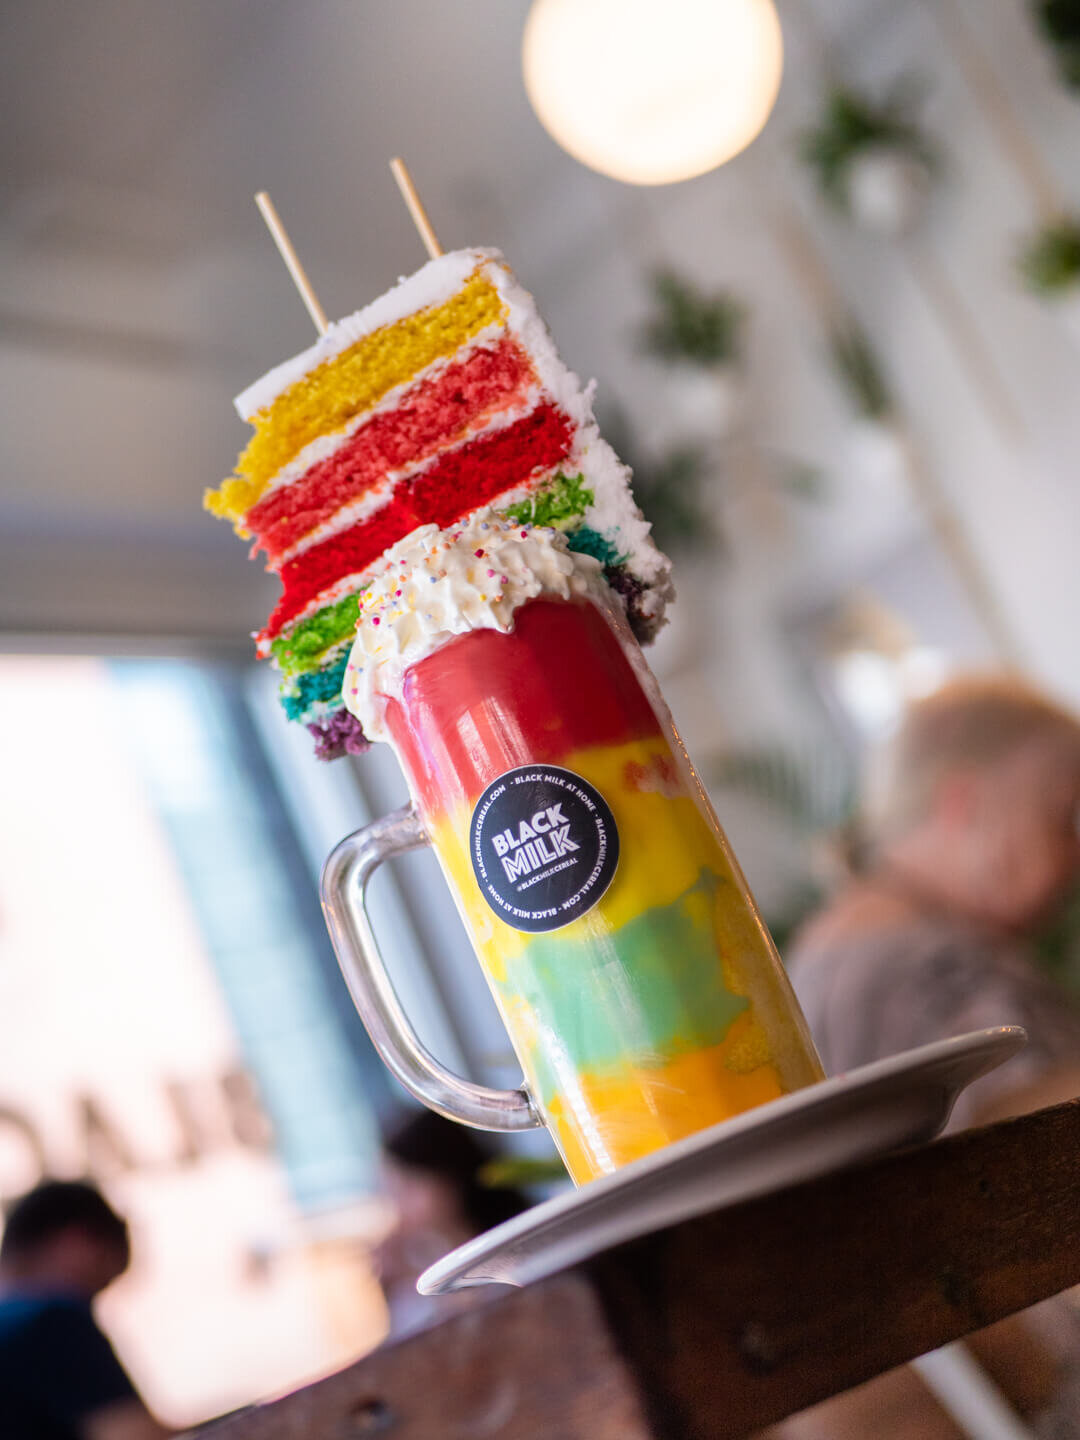 A pride, rainbow themed milkshake from Black Milk in Manchester